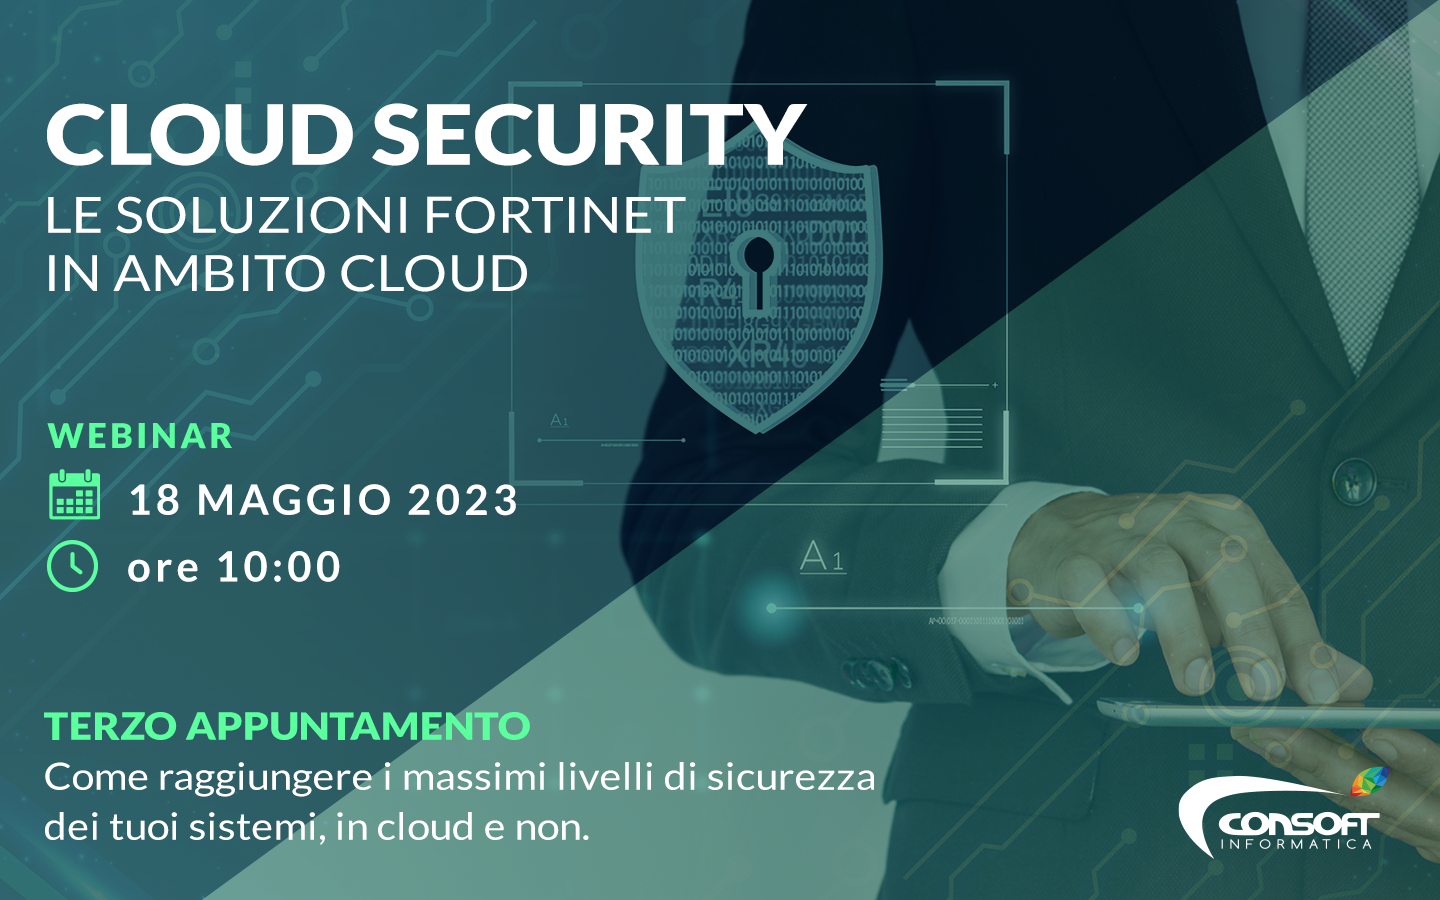 Cloud Security - Webinar cloud e cyber security - evento online 18 maggio - Consoft Informatica